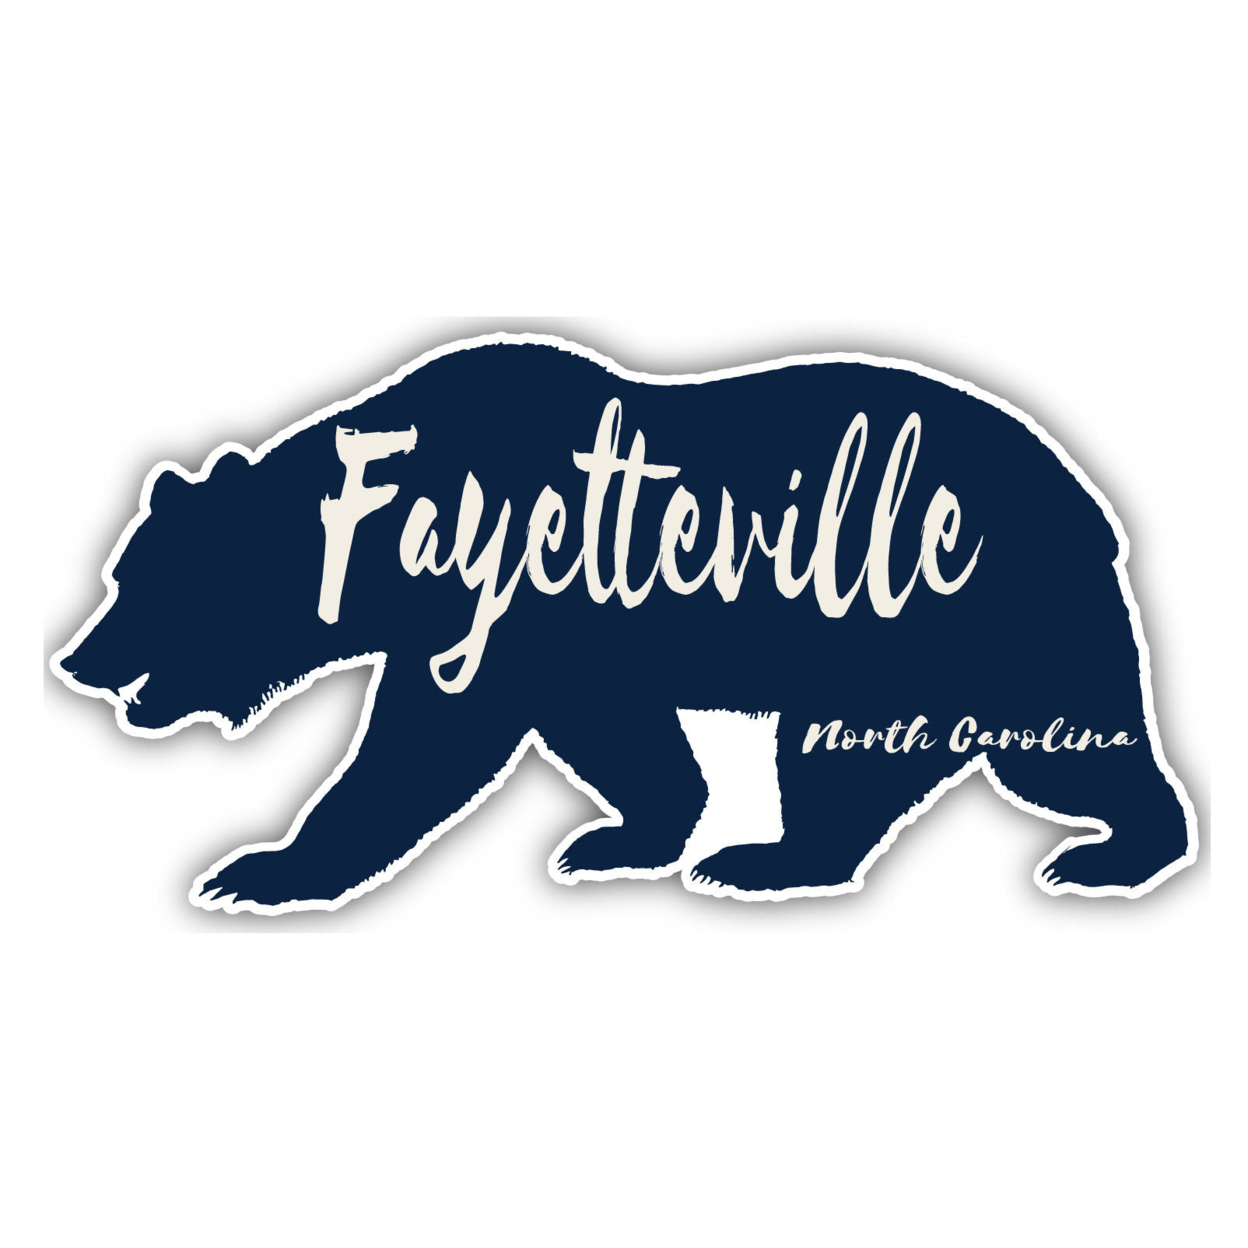 Fayetteville North Carolina Souvenir Decorative Stickers (Choose Theme And Size) - Single Unit, 2-Inch, Tent